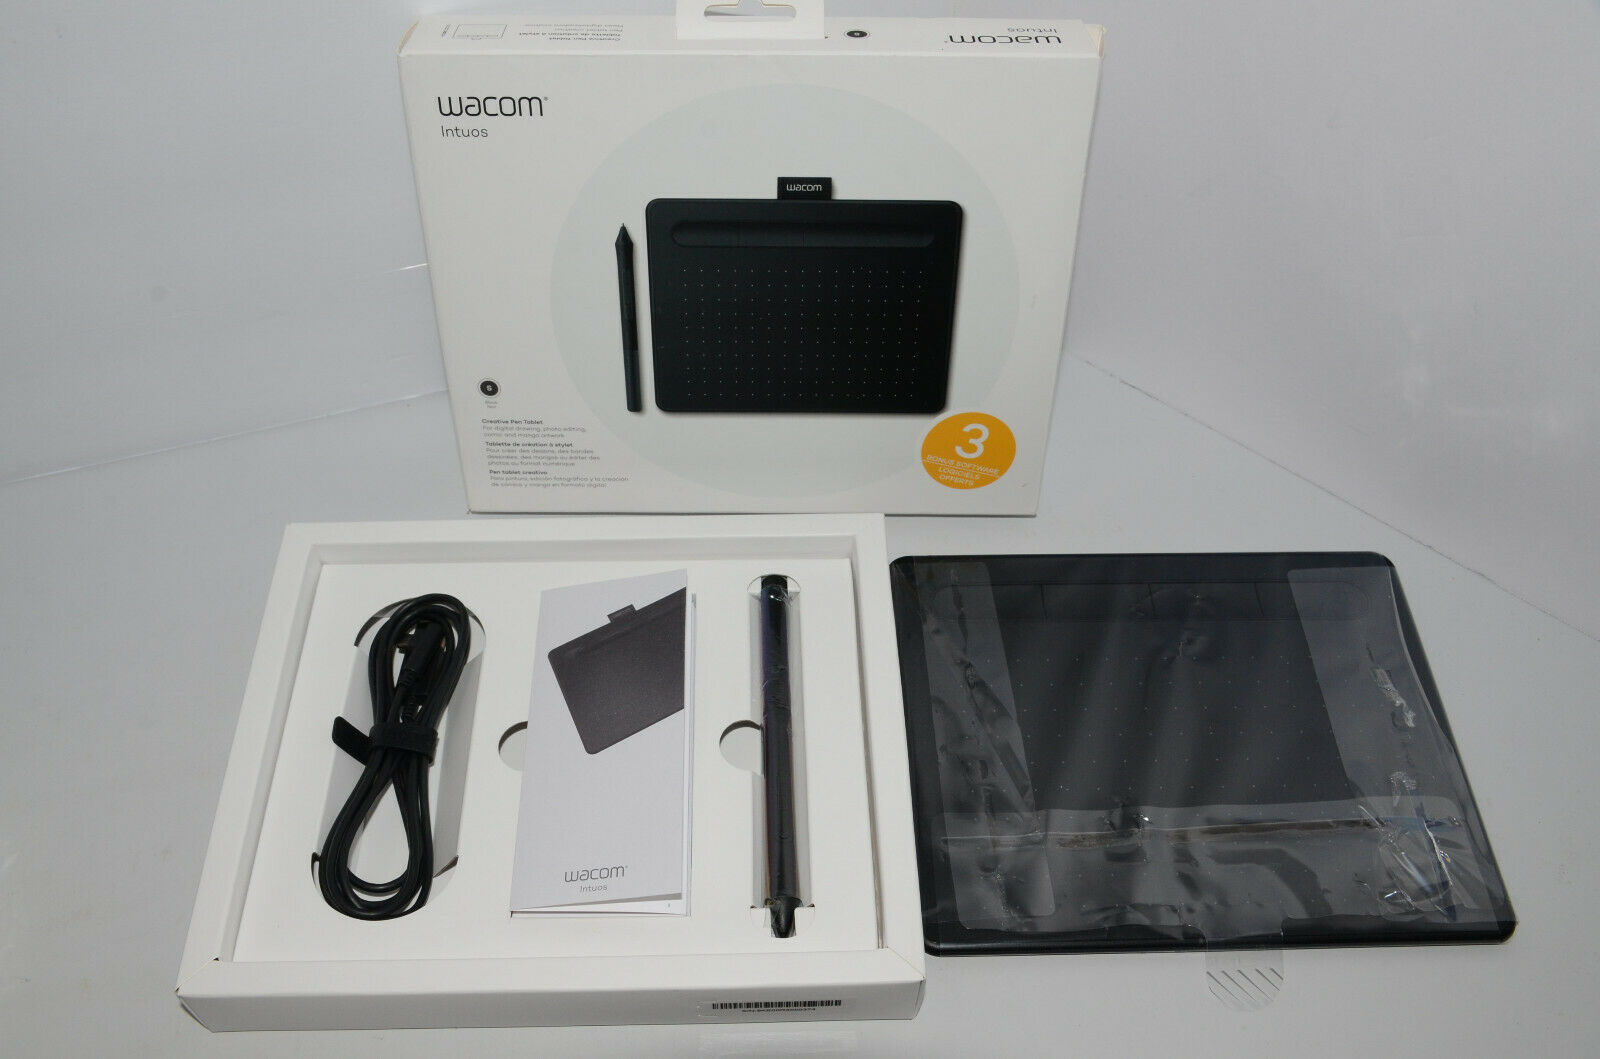 Wacom Intuos Graphics Drawing Tablet, Small 7.9"x 6.3", Black, CTL4100